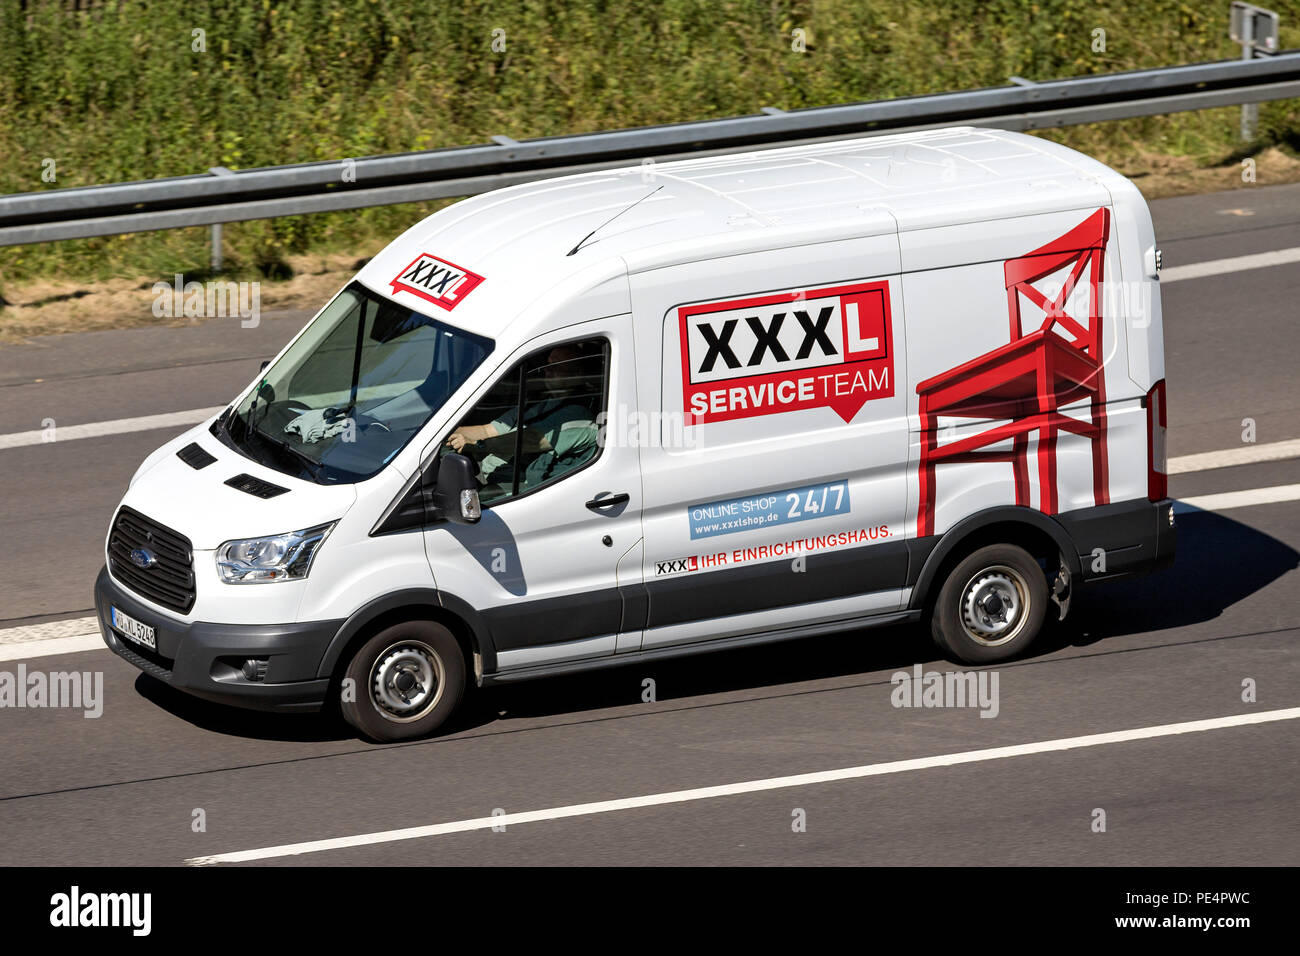 XXXL van on motorway. Austria based XXXLutz is the second largest furniture retailer in the world. Stock Photo